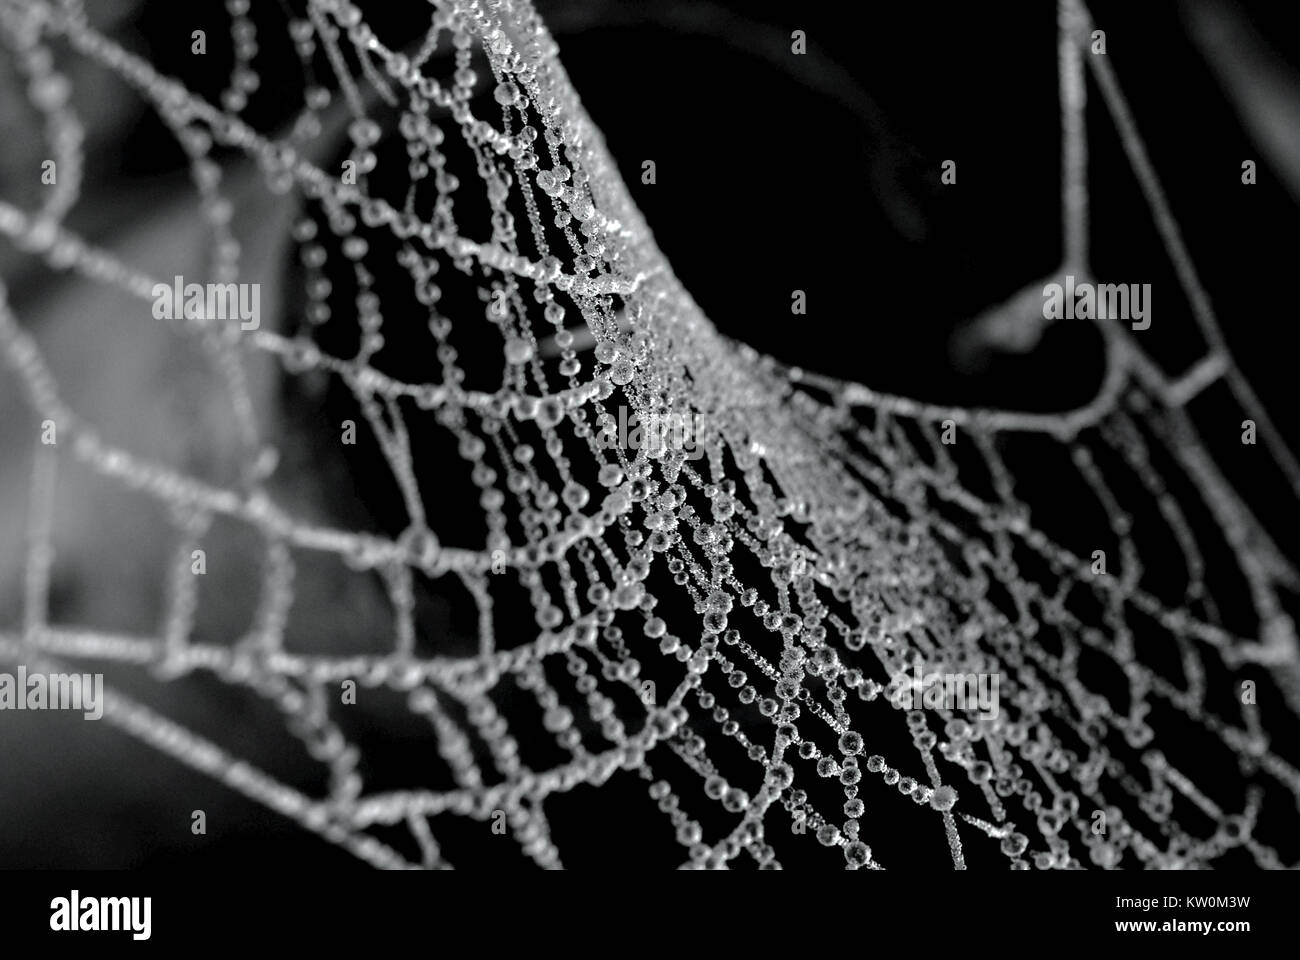 Frozen spider's web, Bury, England. Stock Photo